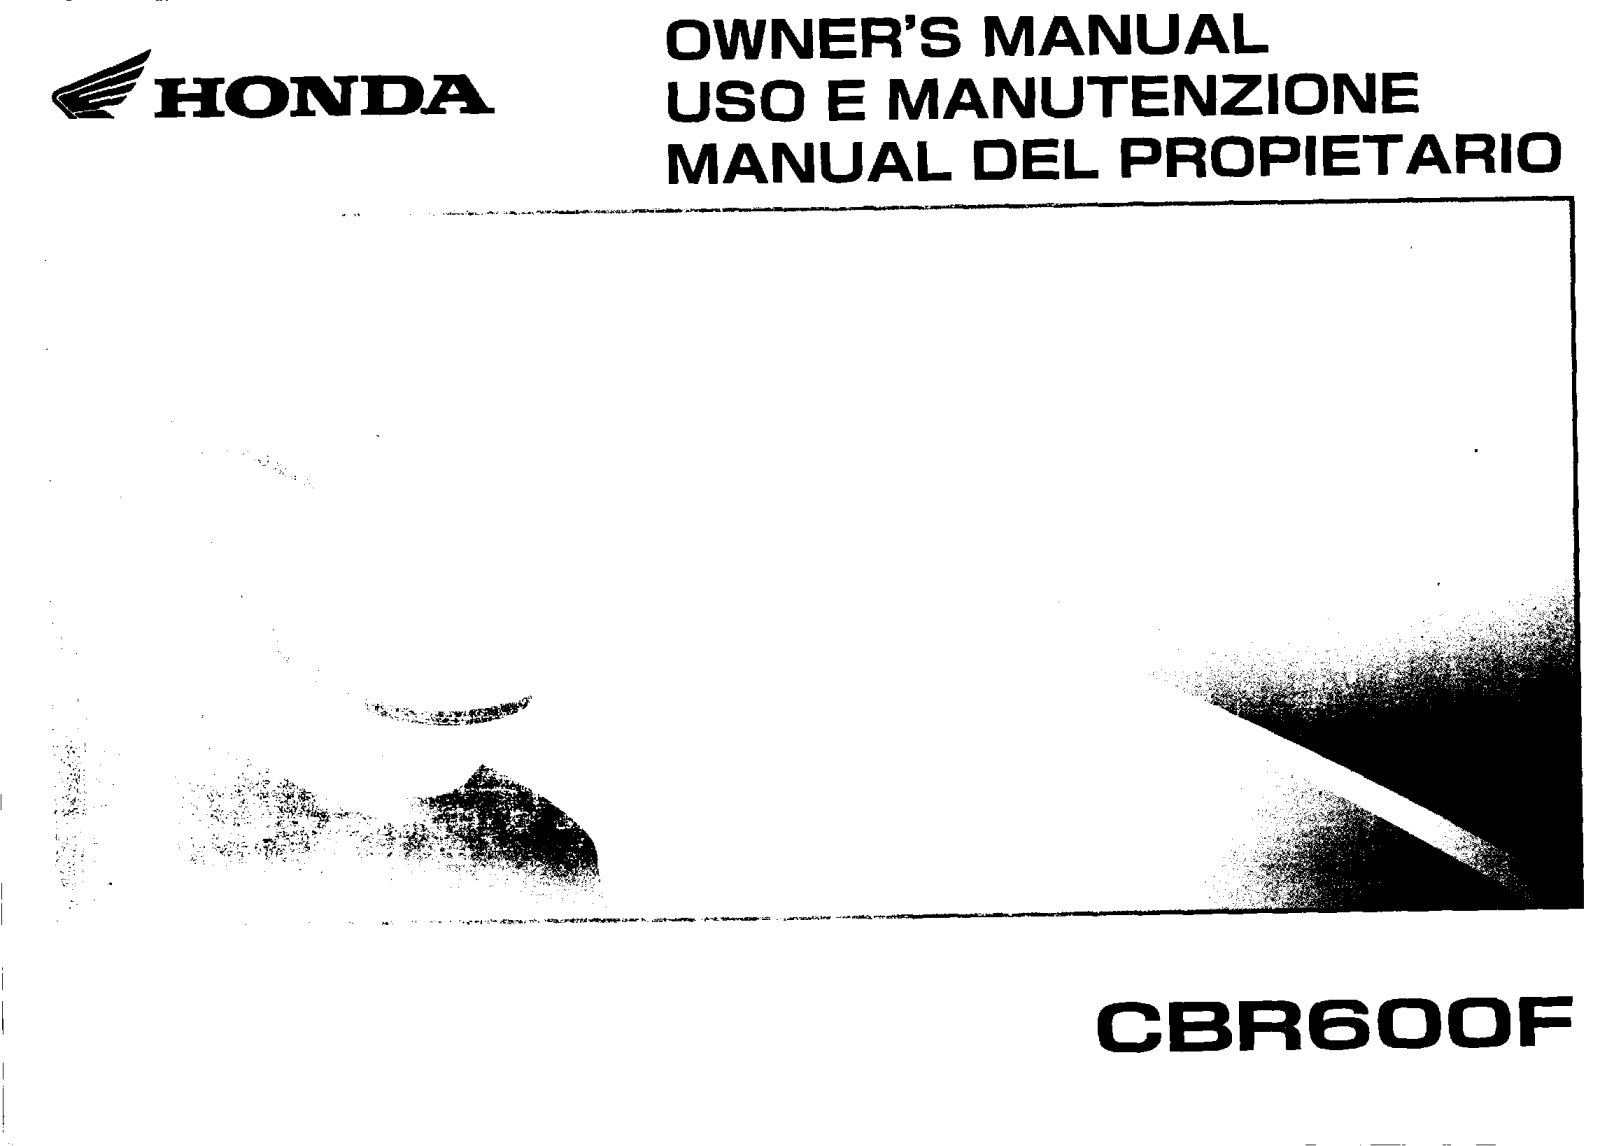 Honda CBR600F6 Owner's Manual